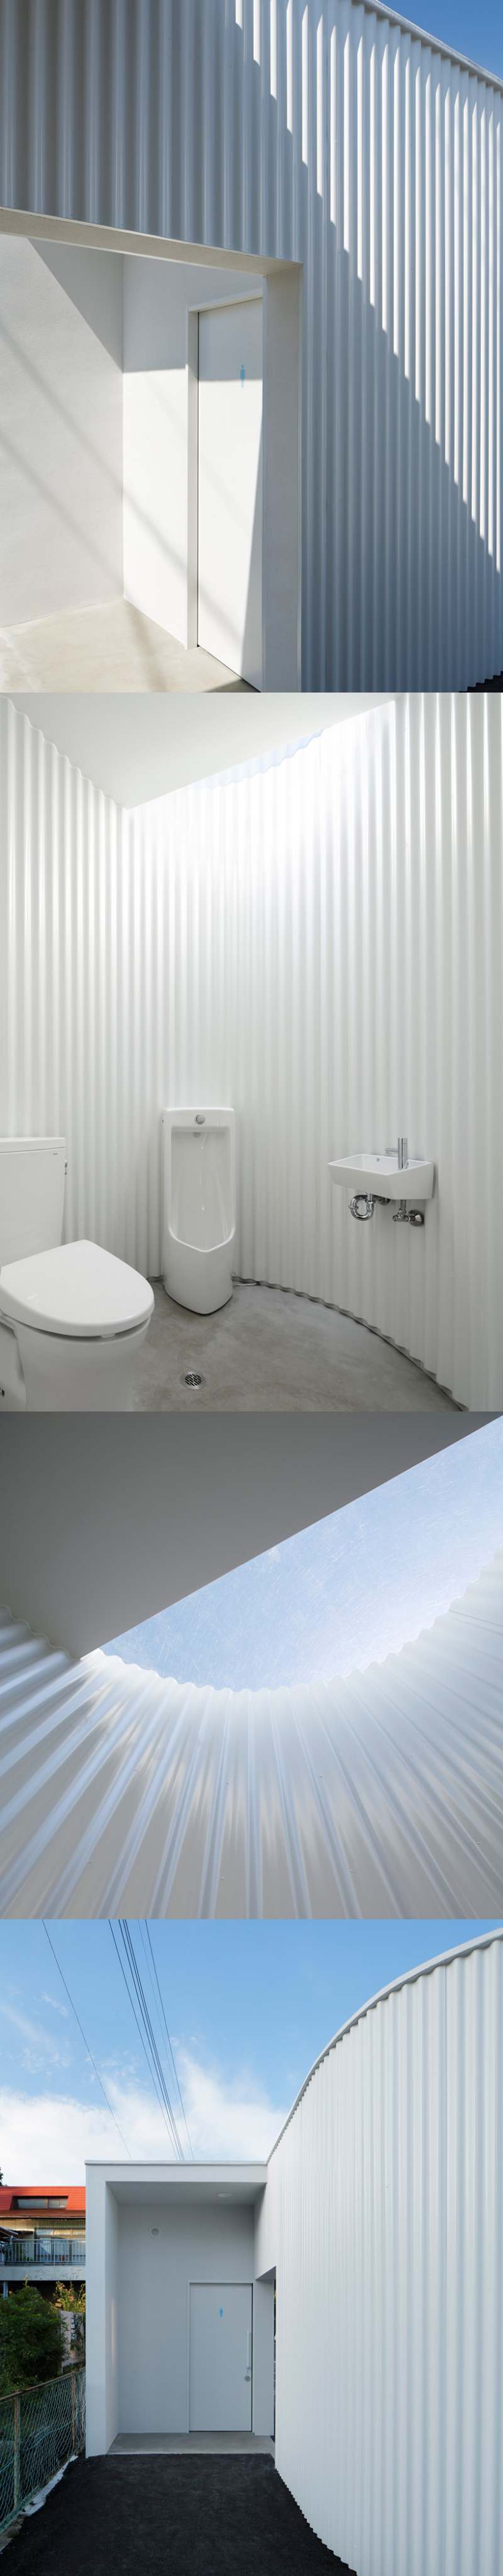 160129-toilet-2